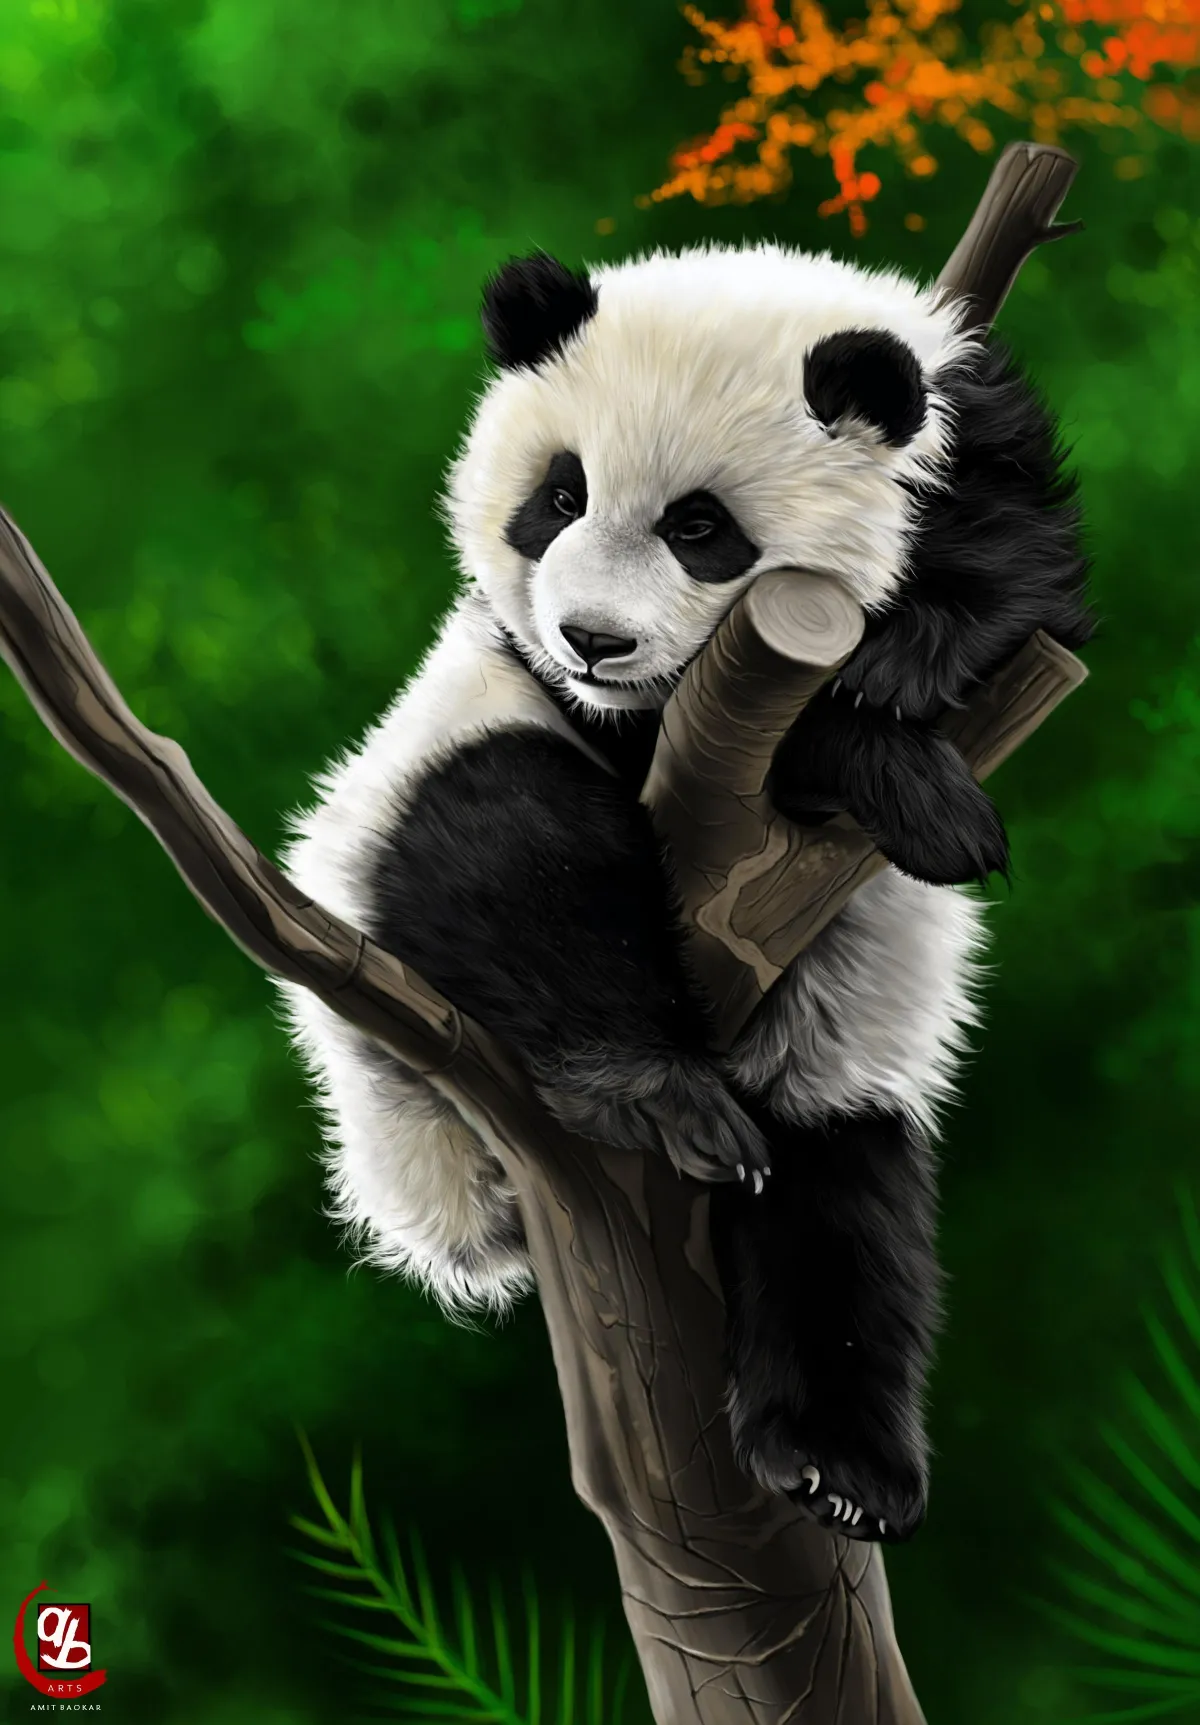 thumb for Panda Hd Wallpaper